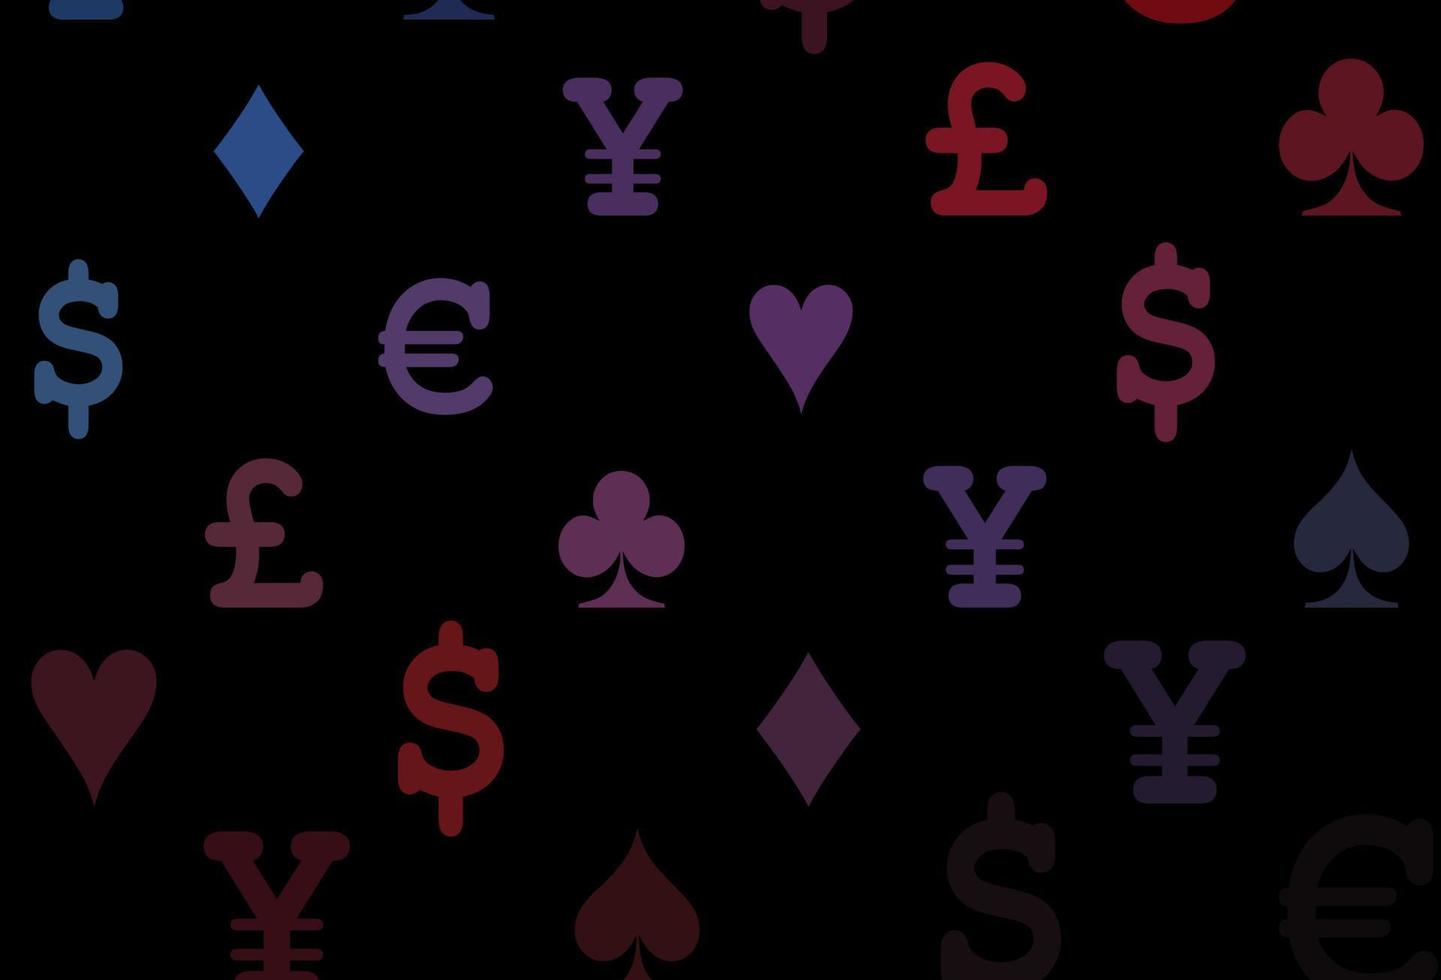 plantilla de vector azul oscuro, rojo con símbolos de póquer.